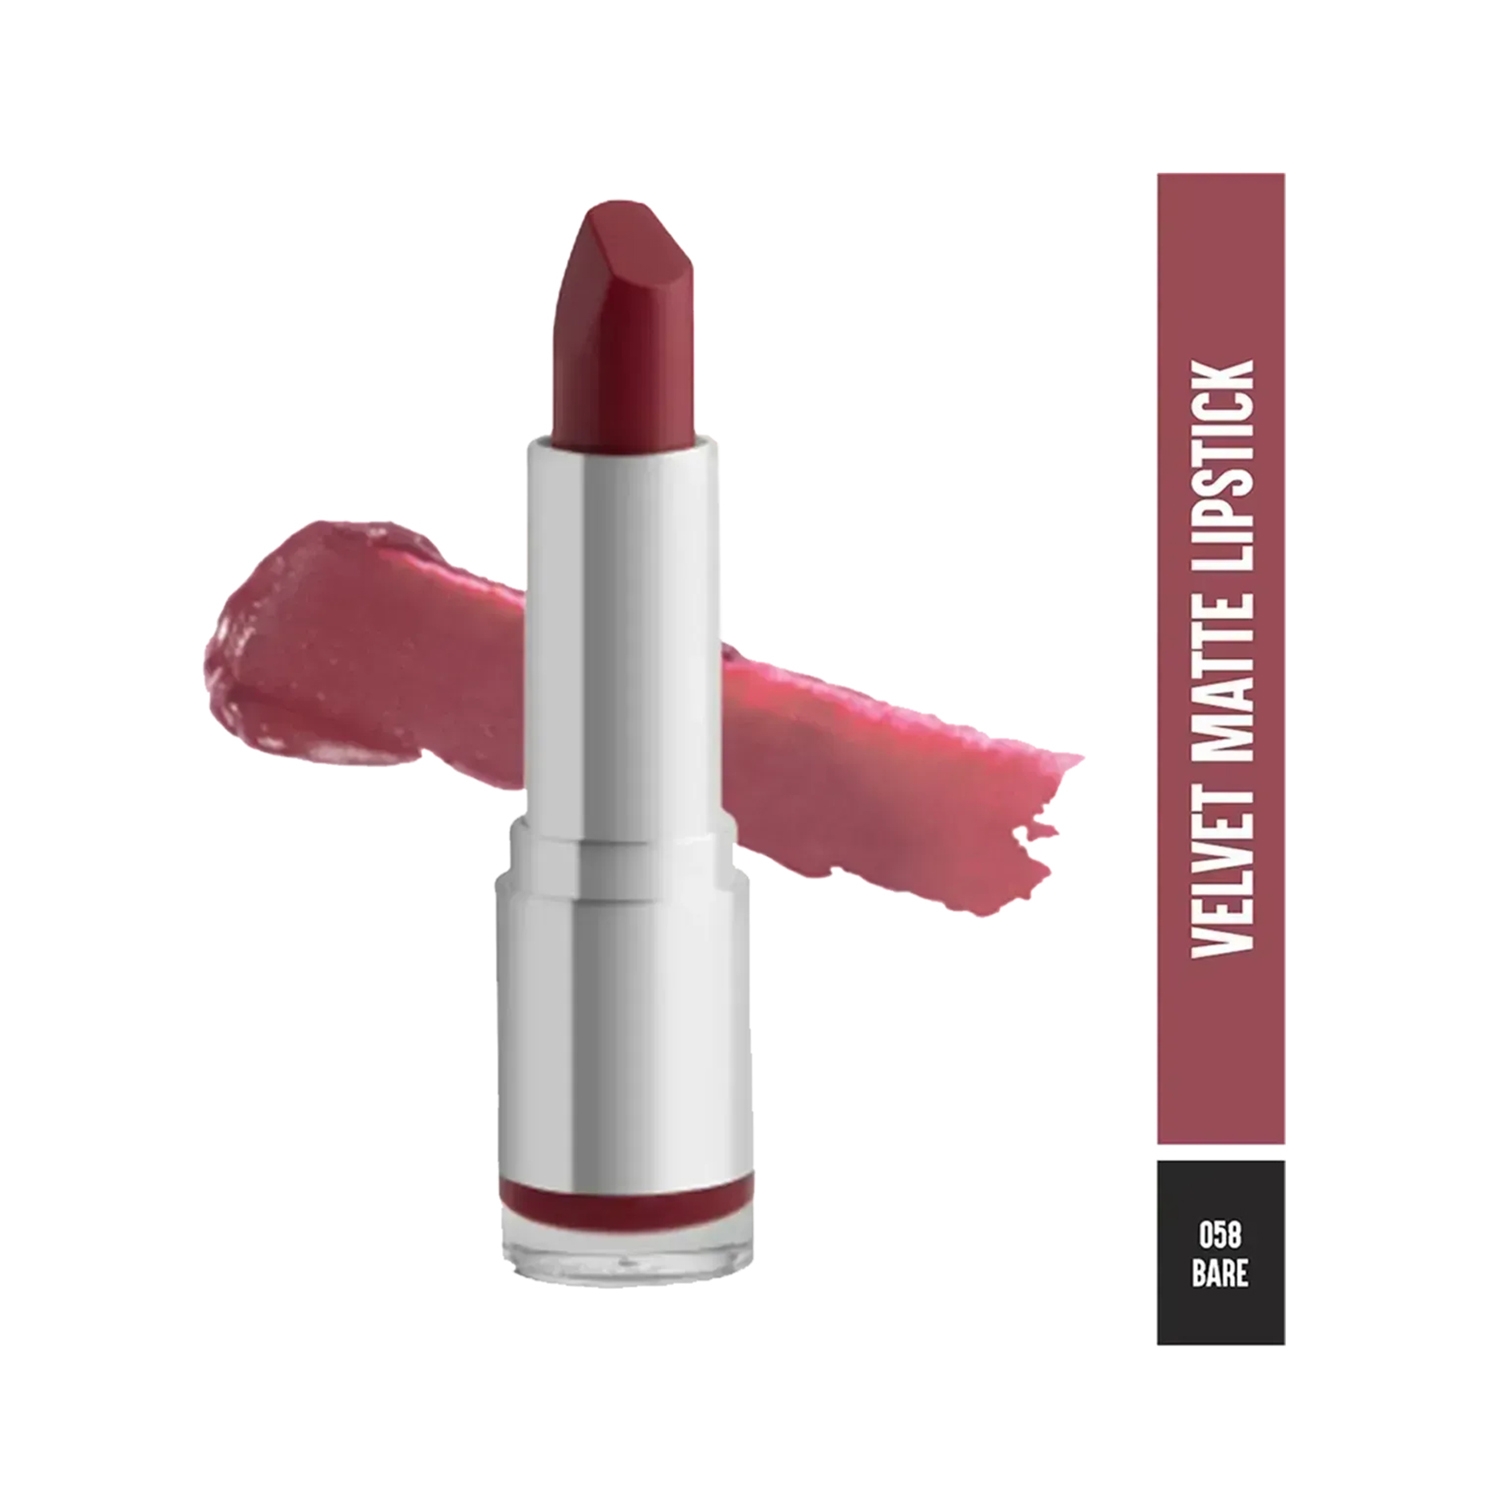 Colorbar | Colorbar Velvet Matte Lipstick - 058 Bare (4.2g)